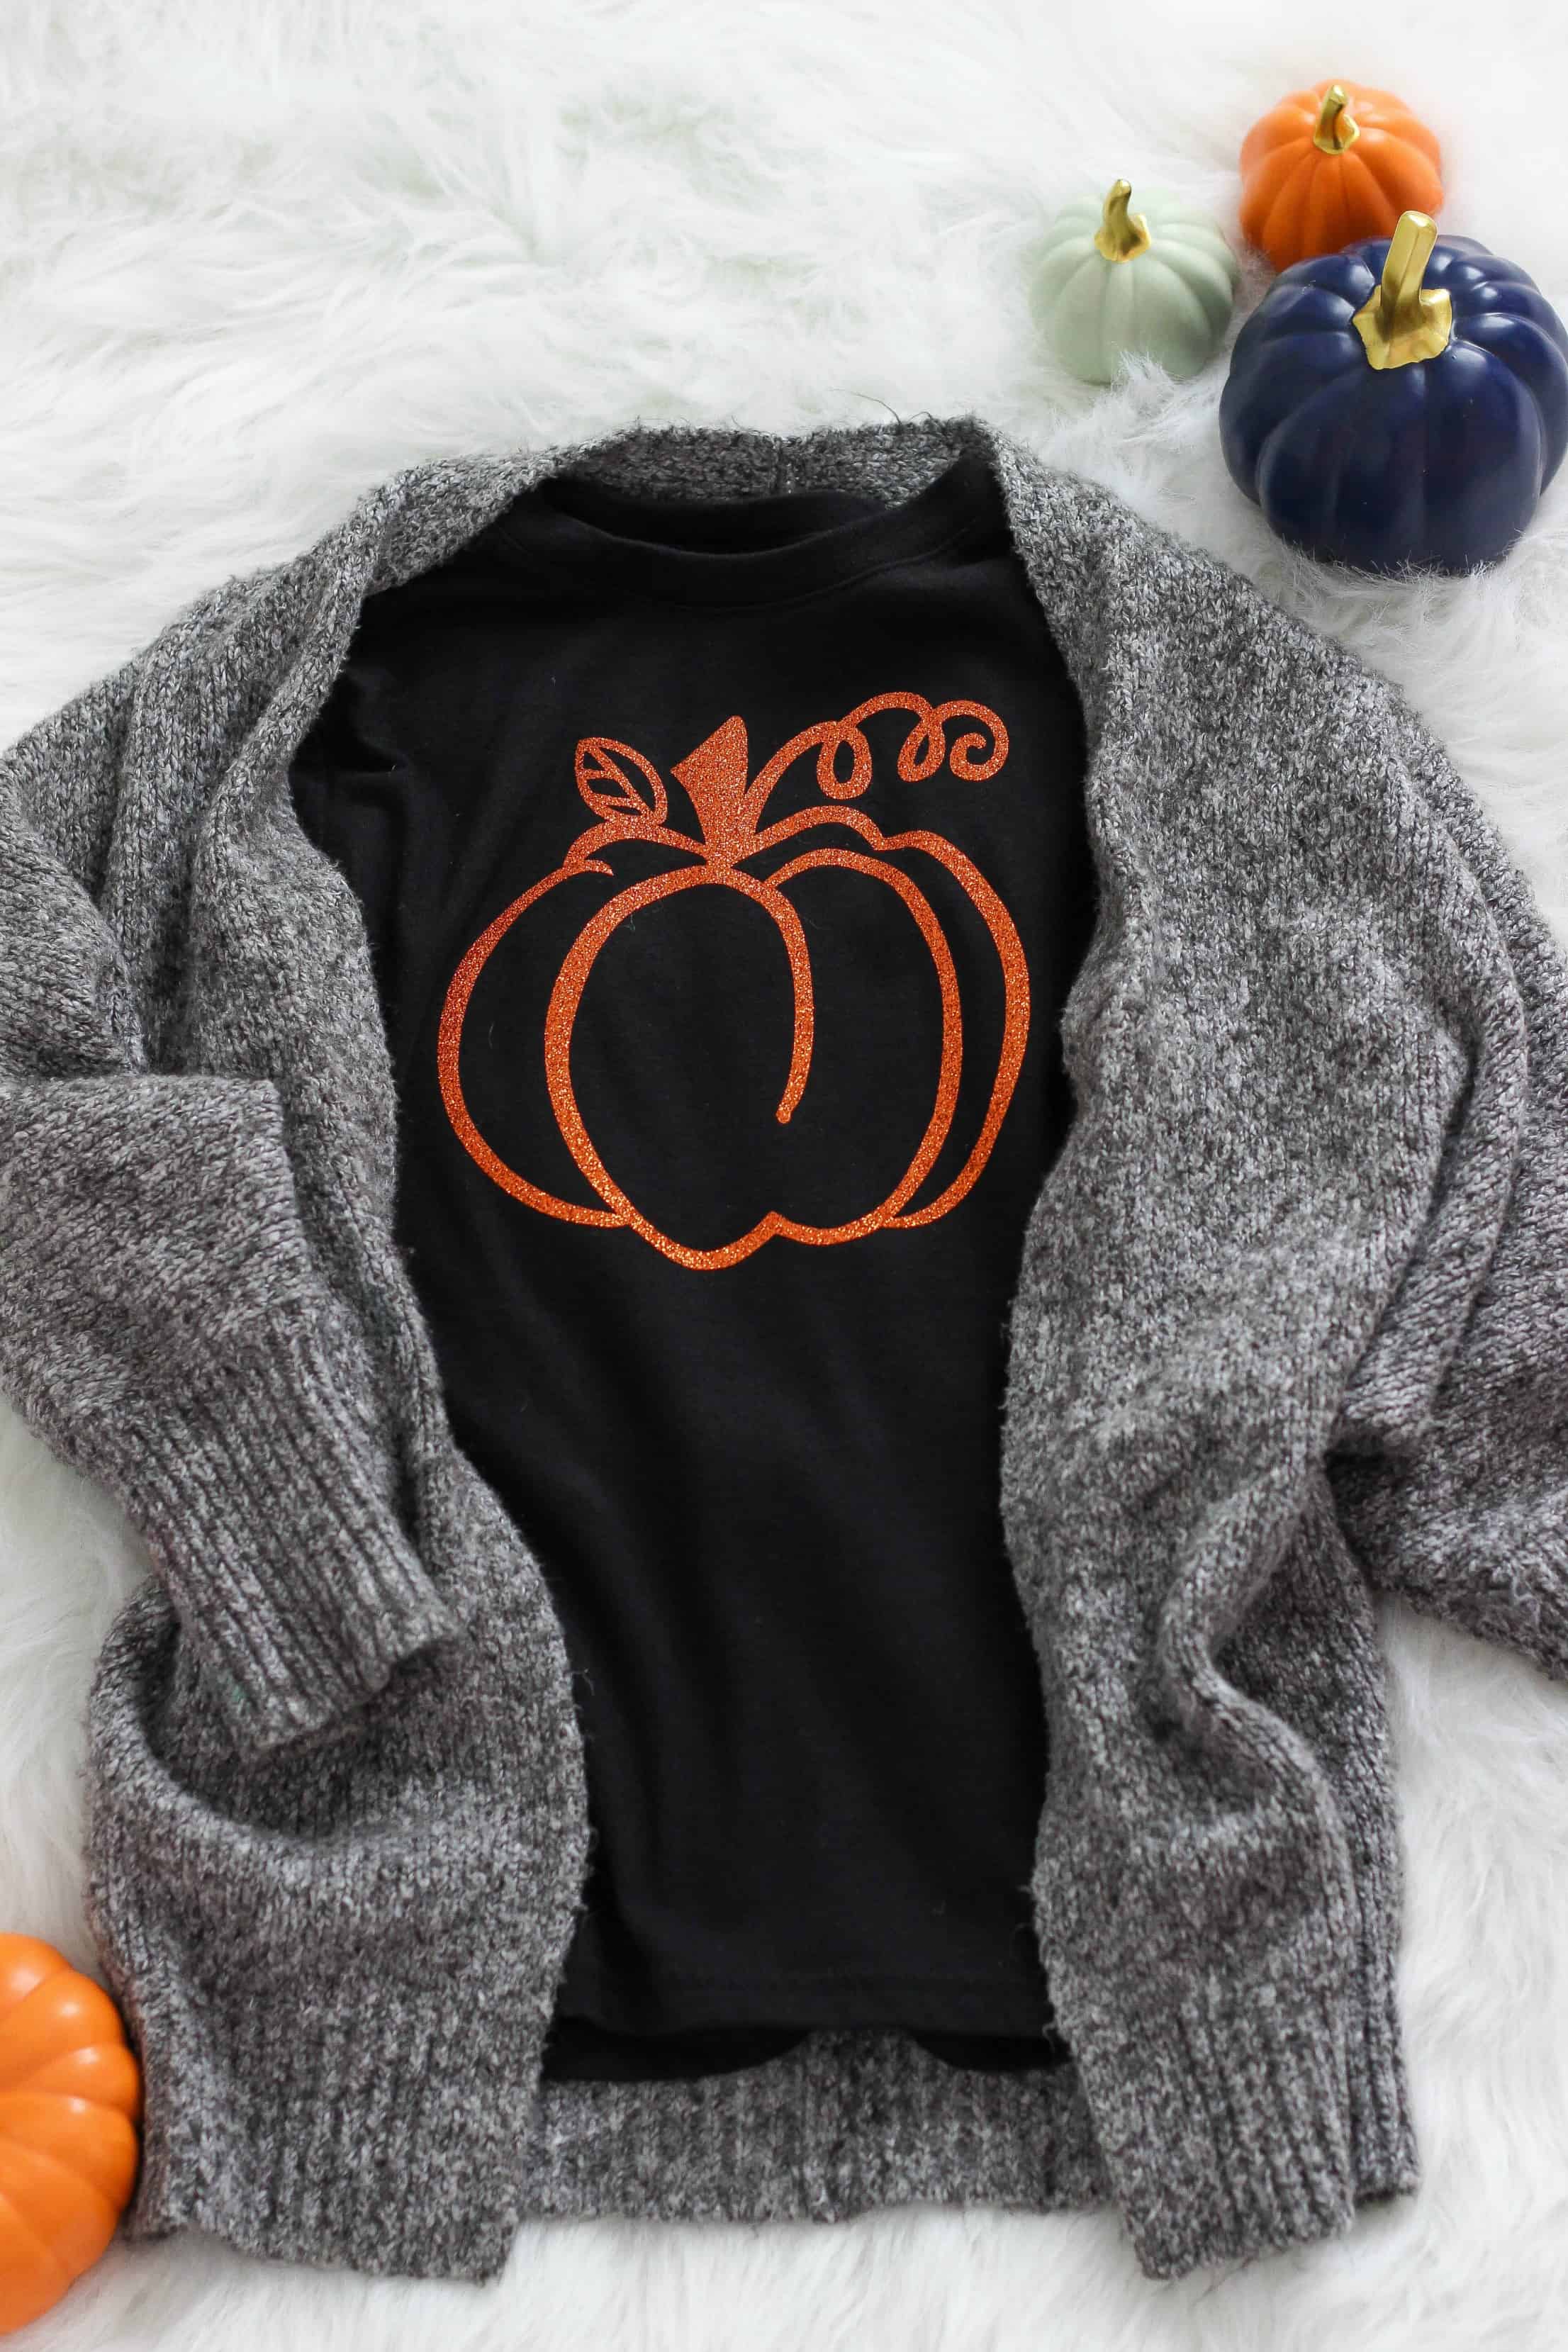 how-to-make-a-charming-pumpkin-iron-on-vinyl-shirt